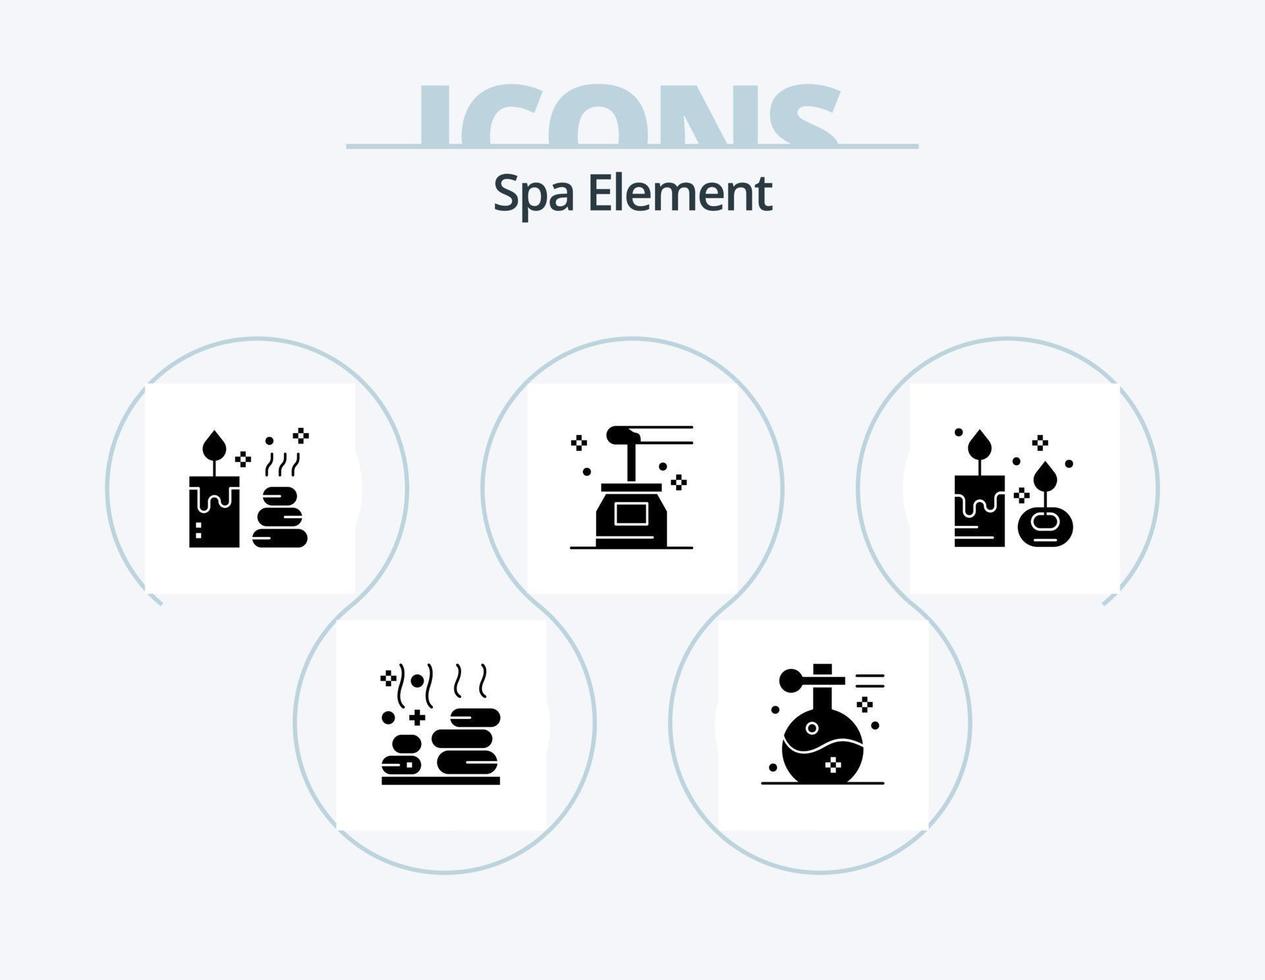 spa element glyf ikon packa 5 ikon design. arom. spa. yoga. olja. skönhet vektor